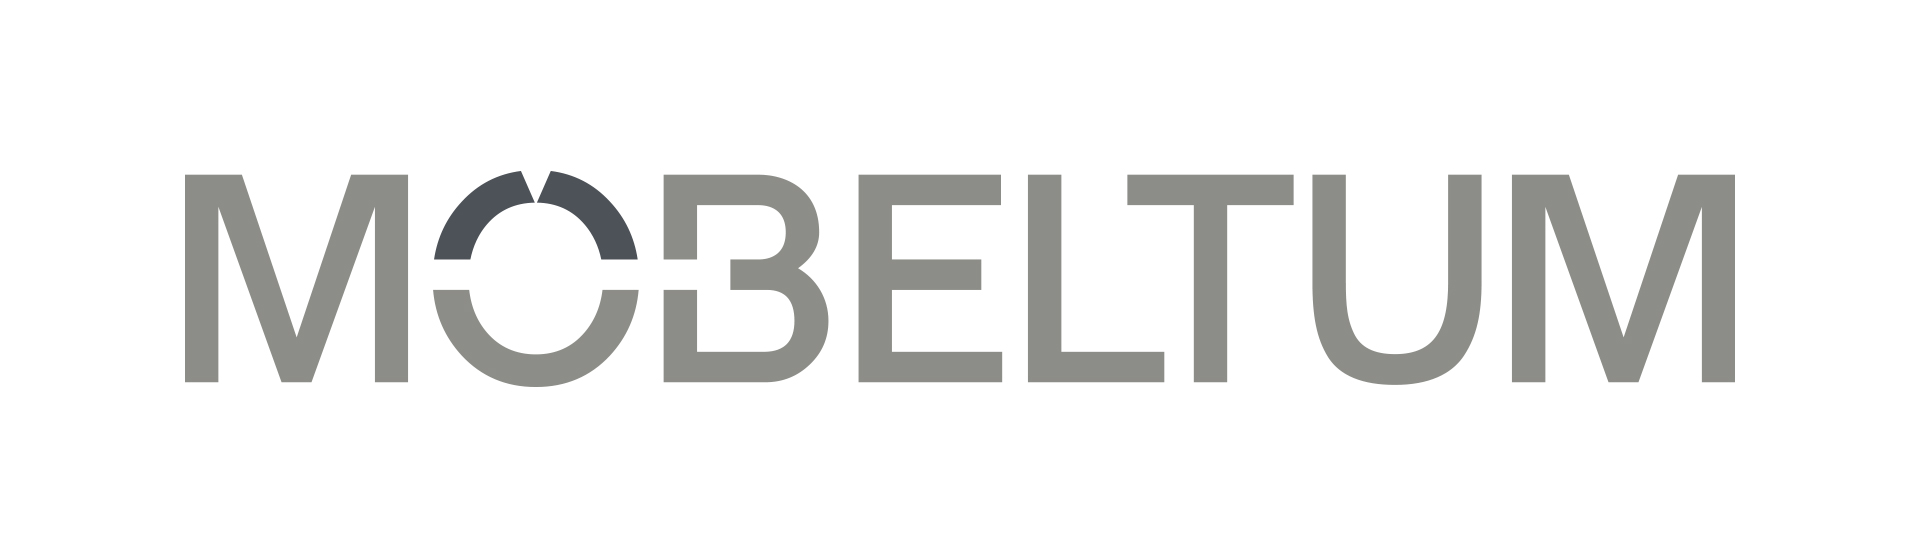 Moebeltum_Logo.jpg